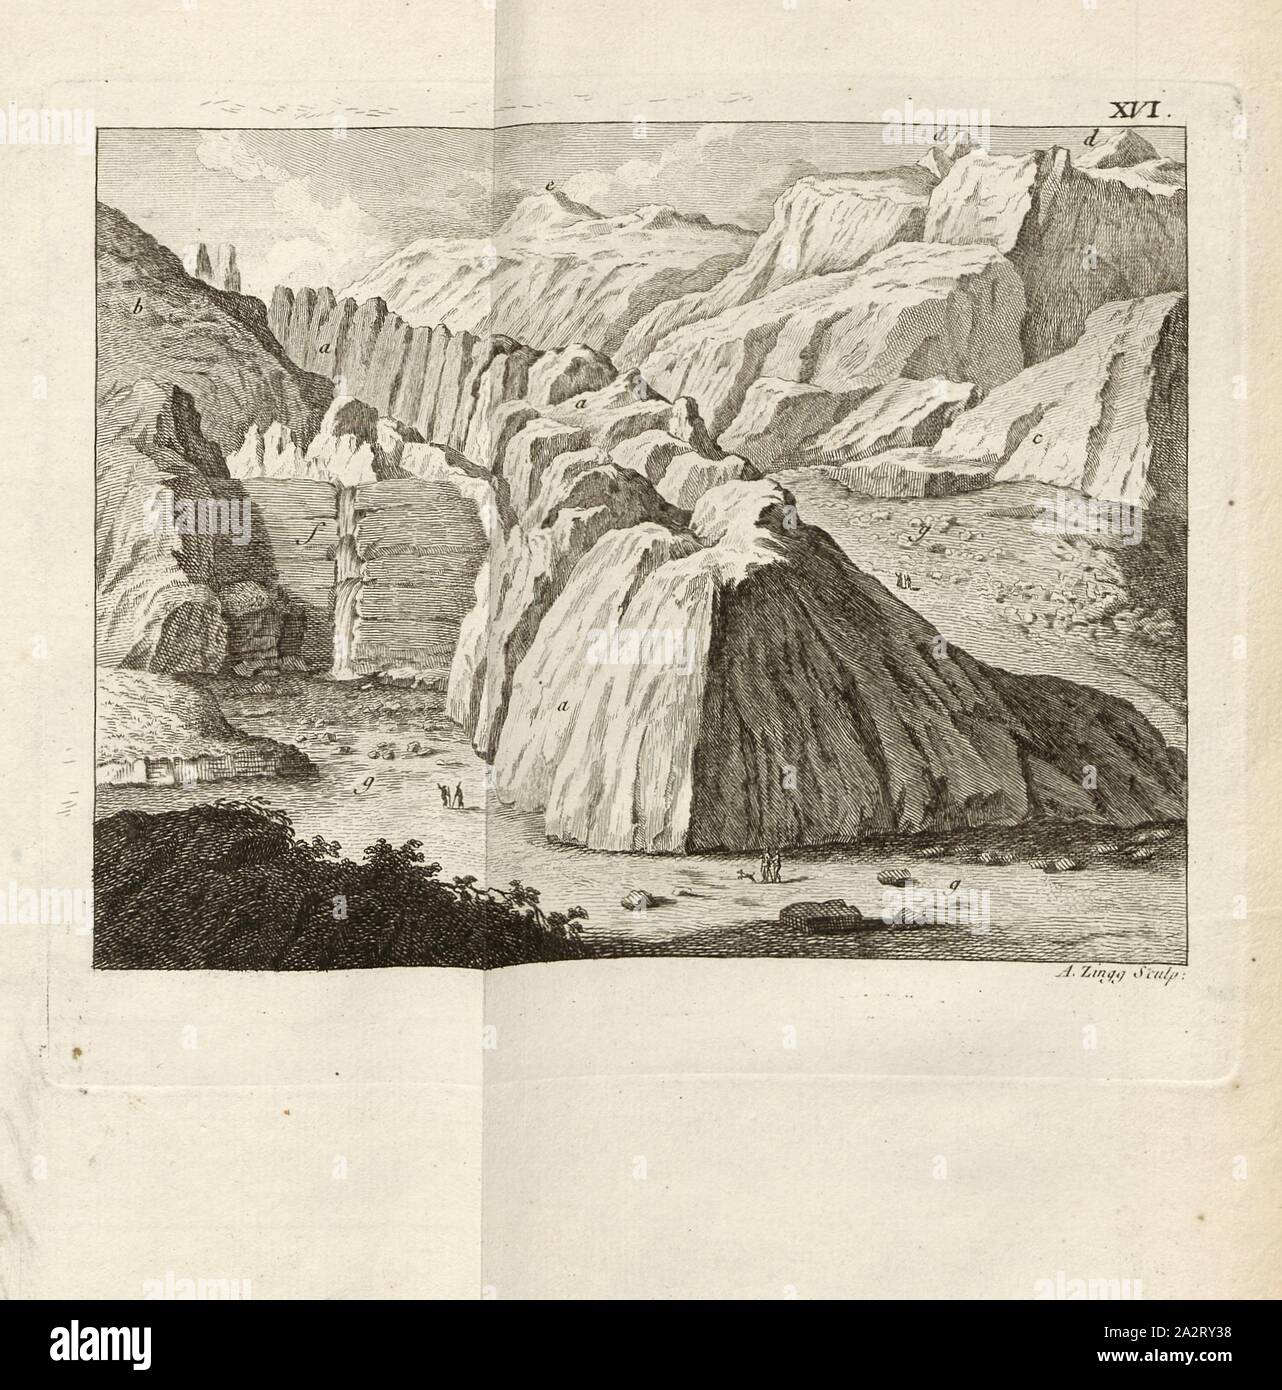 Il Bundle Rheinwald o Reno boschi in paradiso in Bunden, vicino alla sorgente del Reno del braccio posteriore, vista la sorgente del Reno nel Rheinwald, firmato: A. Zingg (sculp.), Fig. 18, XVI, dopo p. 372, p. 413, Zingg, Adrian (sculp.), 1770, Gottlieb Sigmund Gruner; Louis-Félix Guinement de Keralio: Histoire Naturelle des glacieres de Suisse. Parigi: Panckoucke, MDCCLXX [1770 Foto Stock